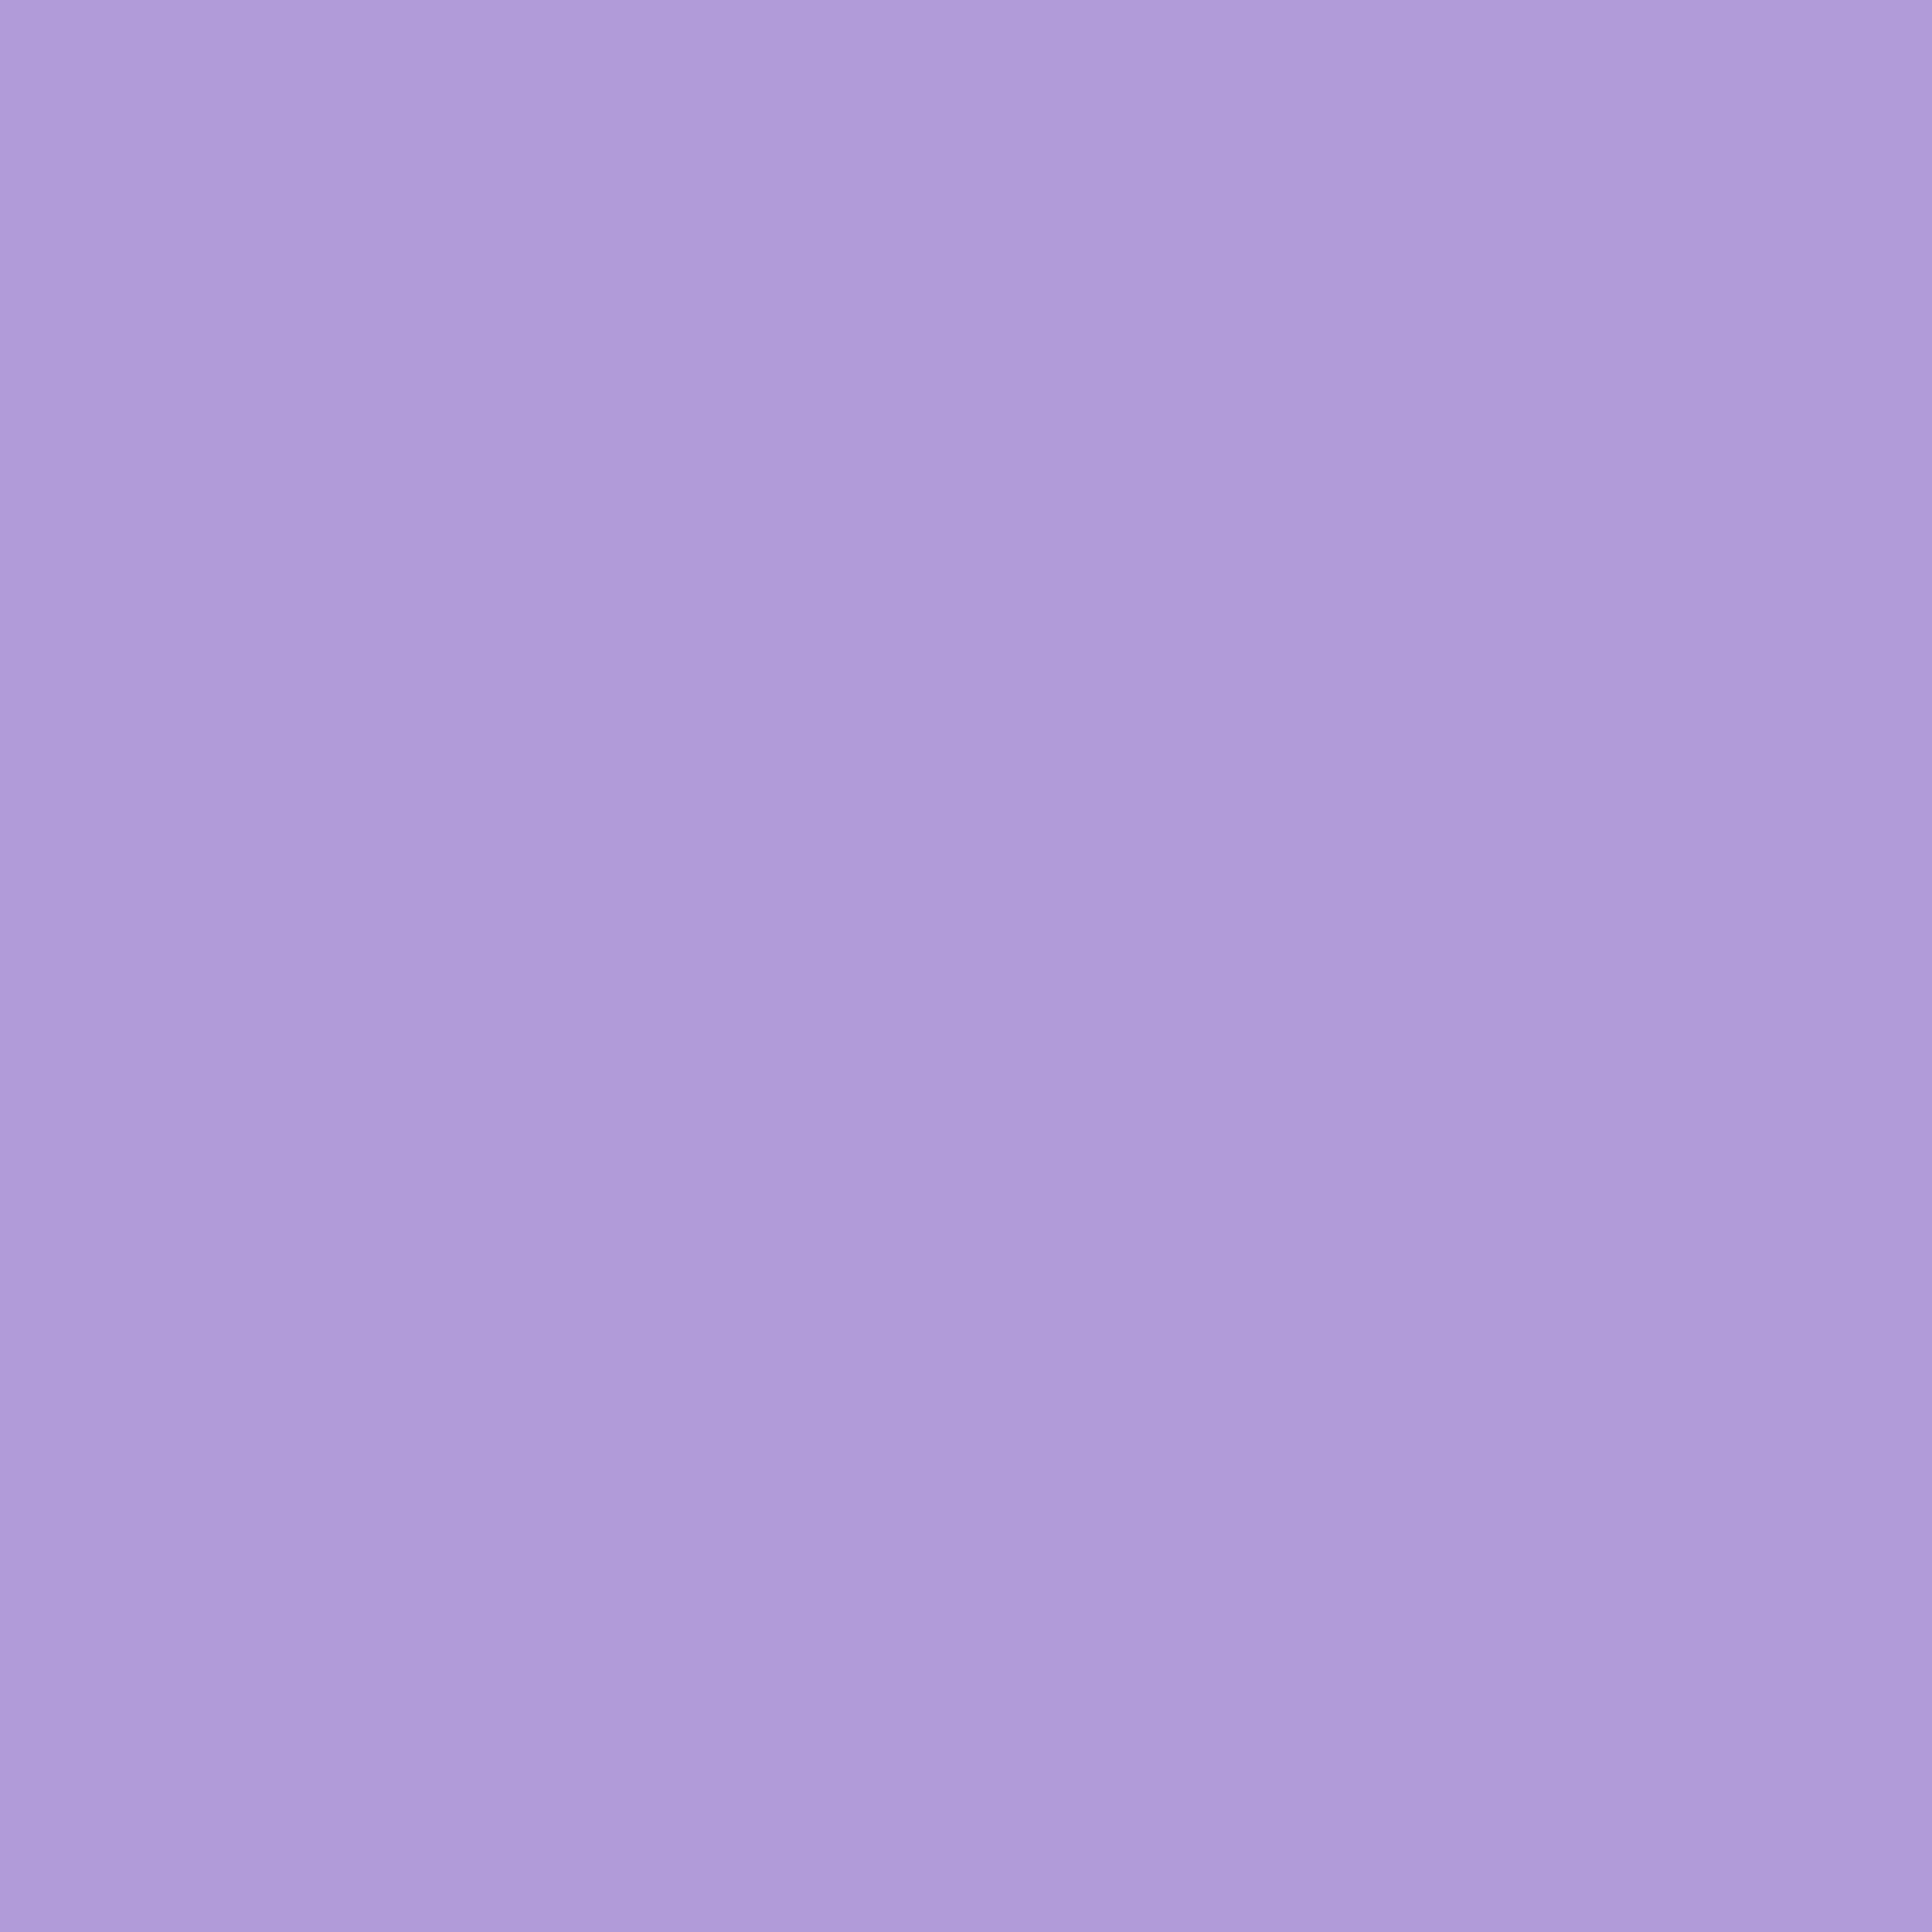 3600x3600 Light Pastel Purple Solid Color Background